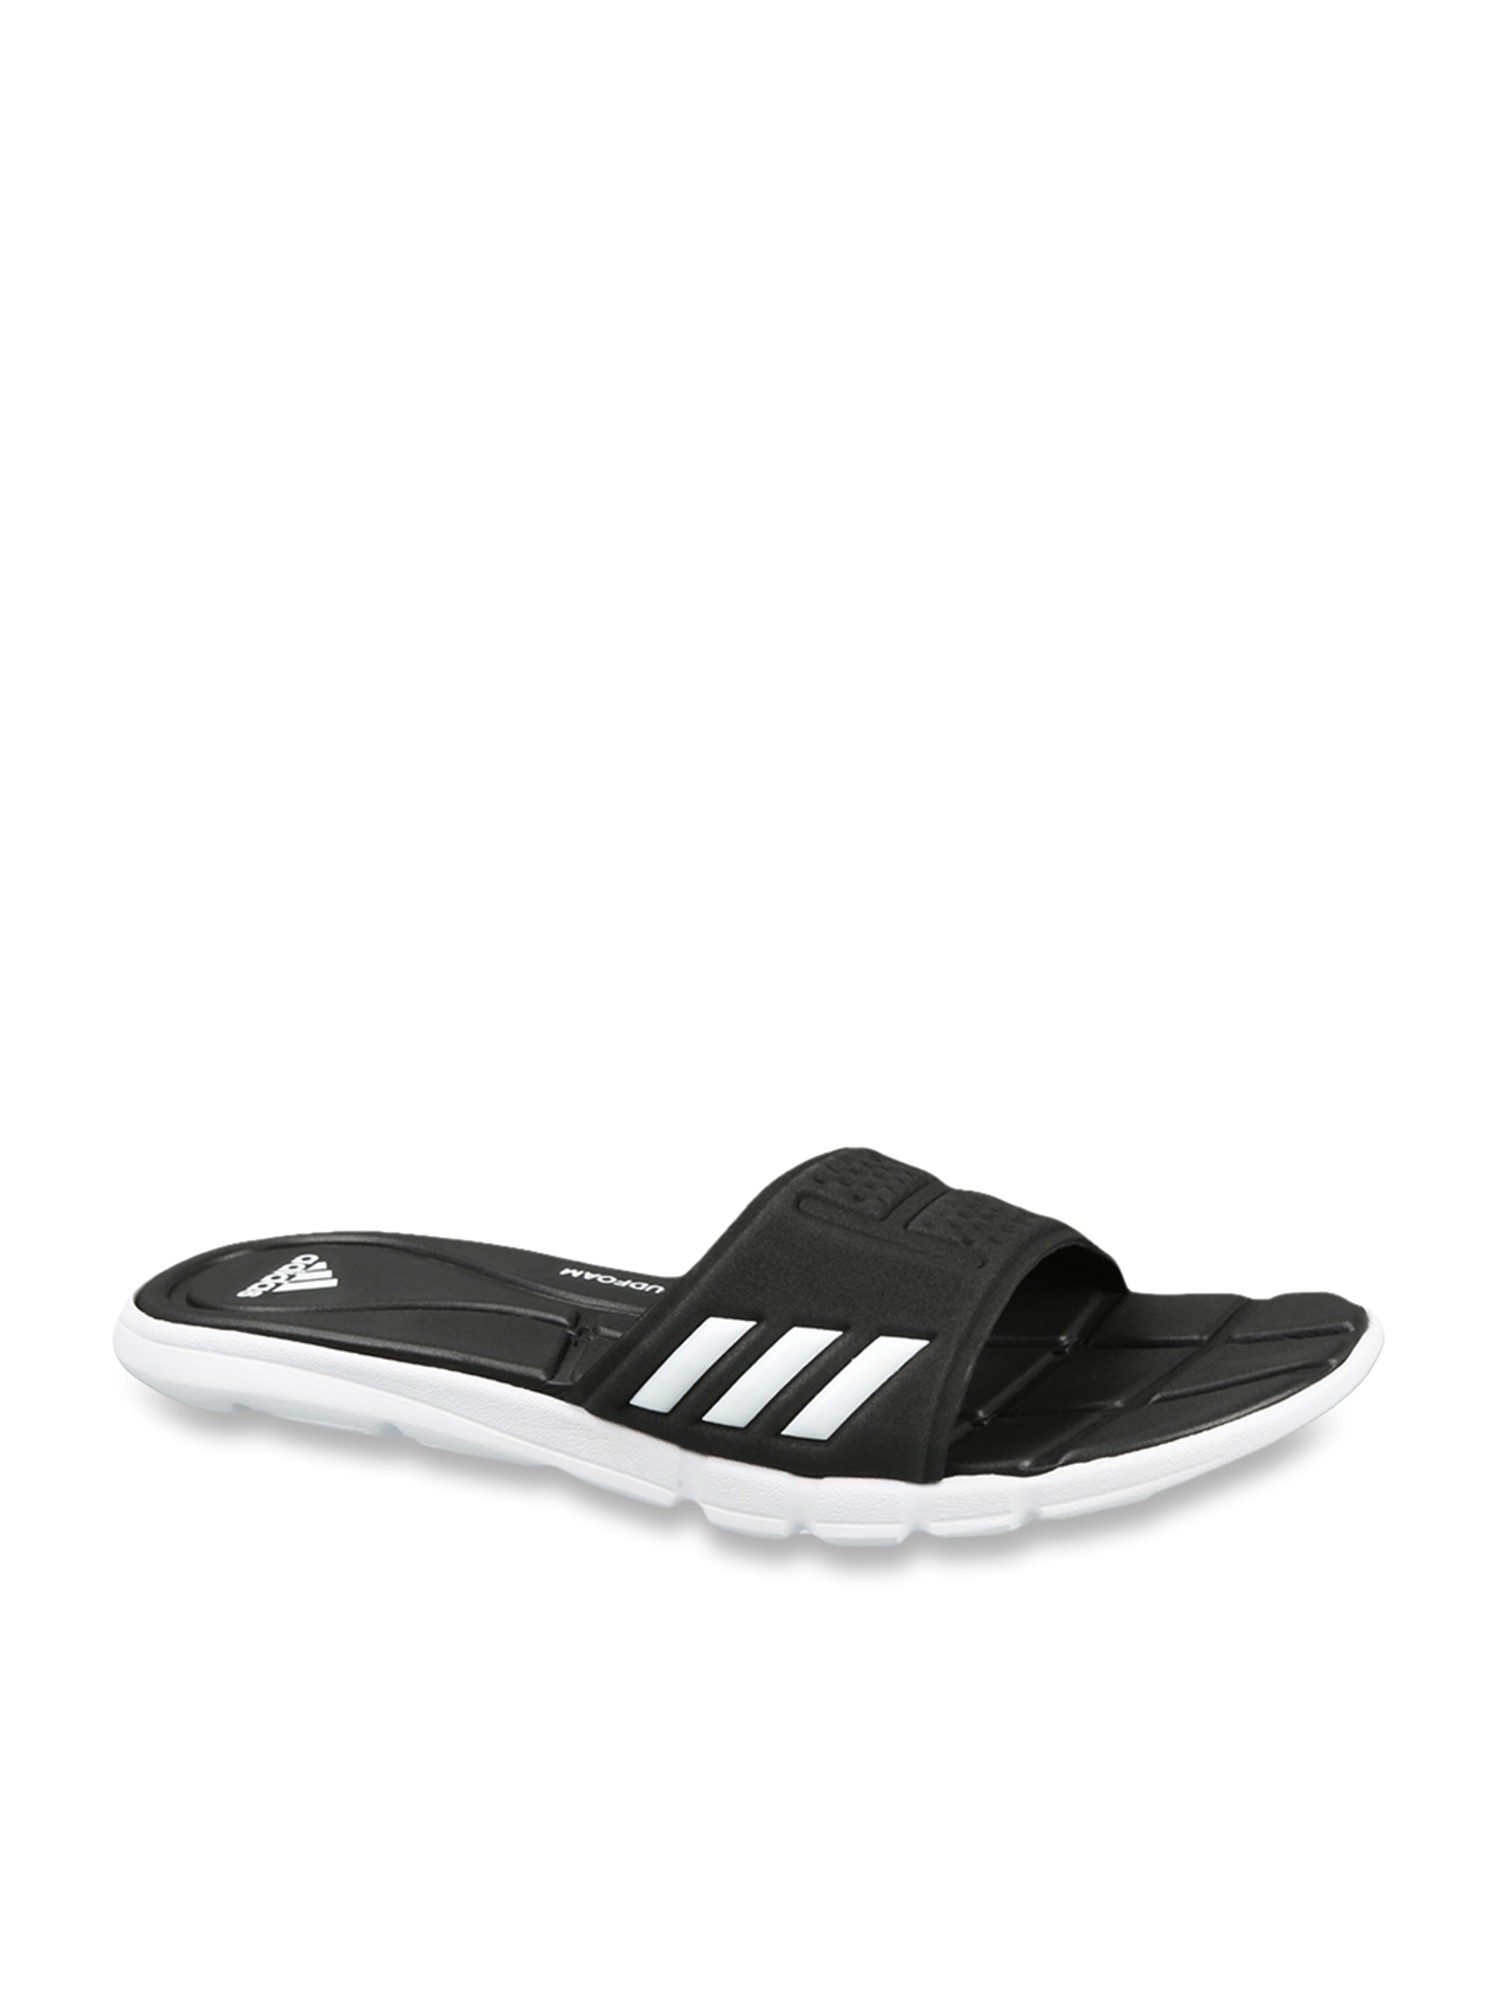 Mens Adidas Outdoor Kerio Mesh 3 0 Sandals, Size: 6 7 11